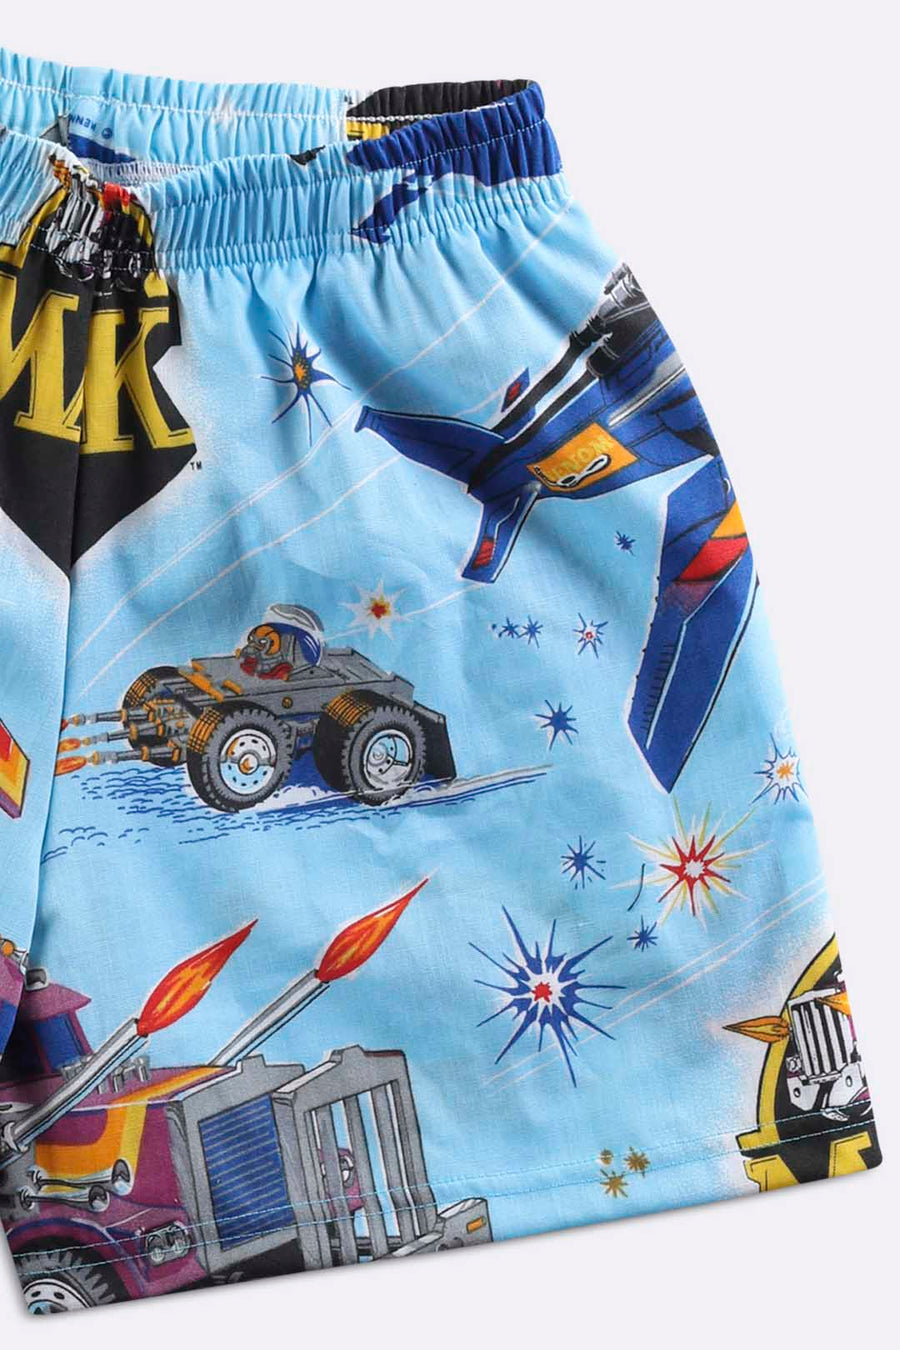 Unisex Rework Racing Boy Shorts - XS, M, L